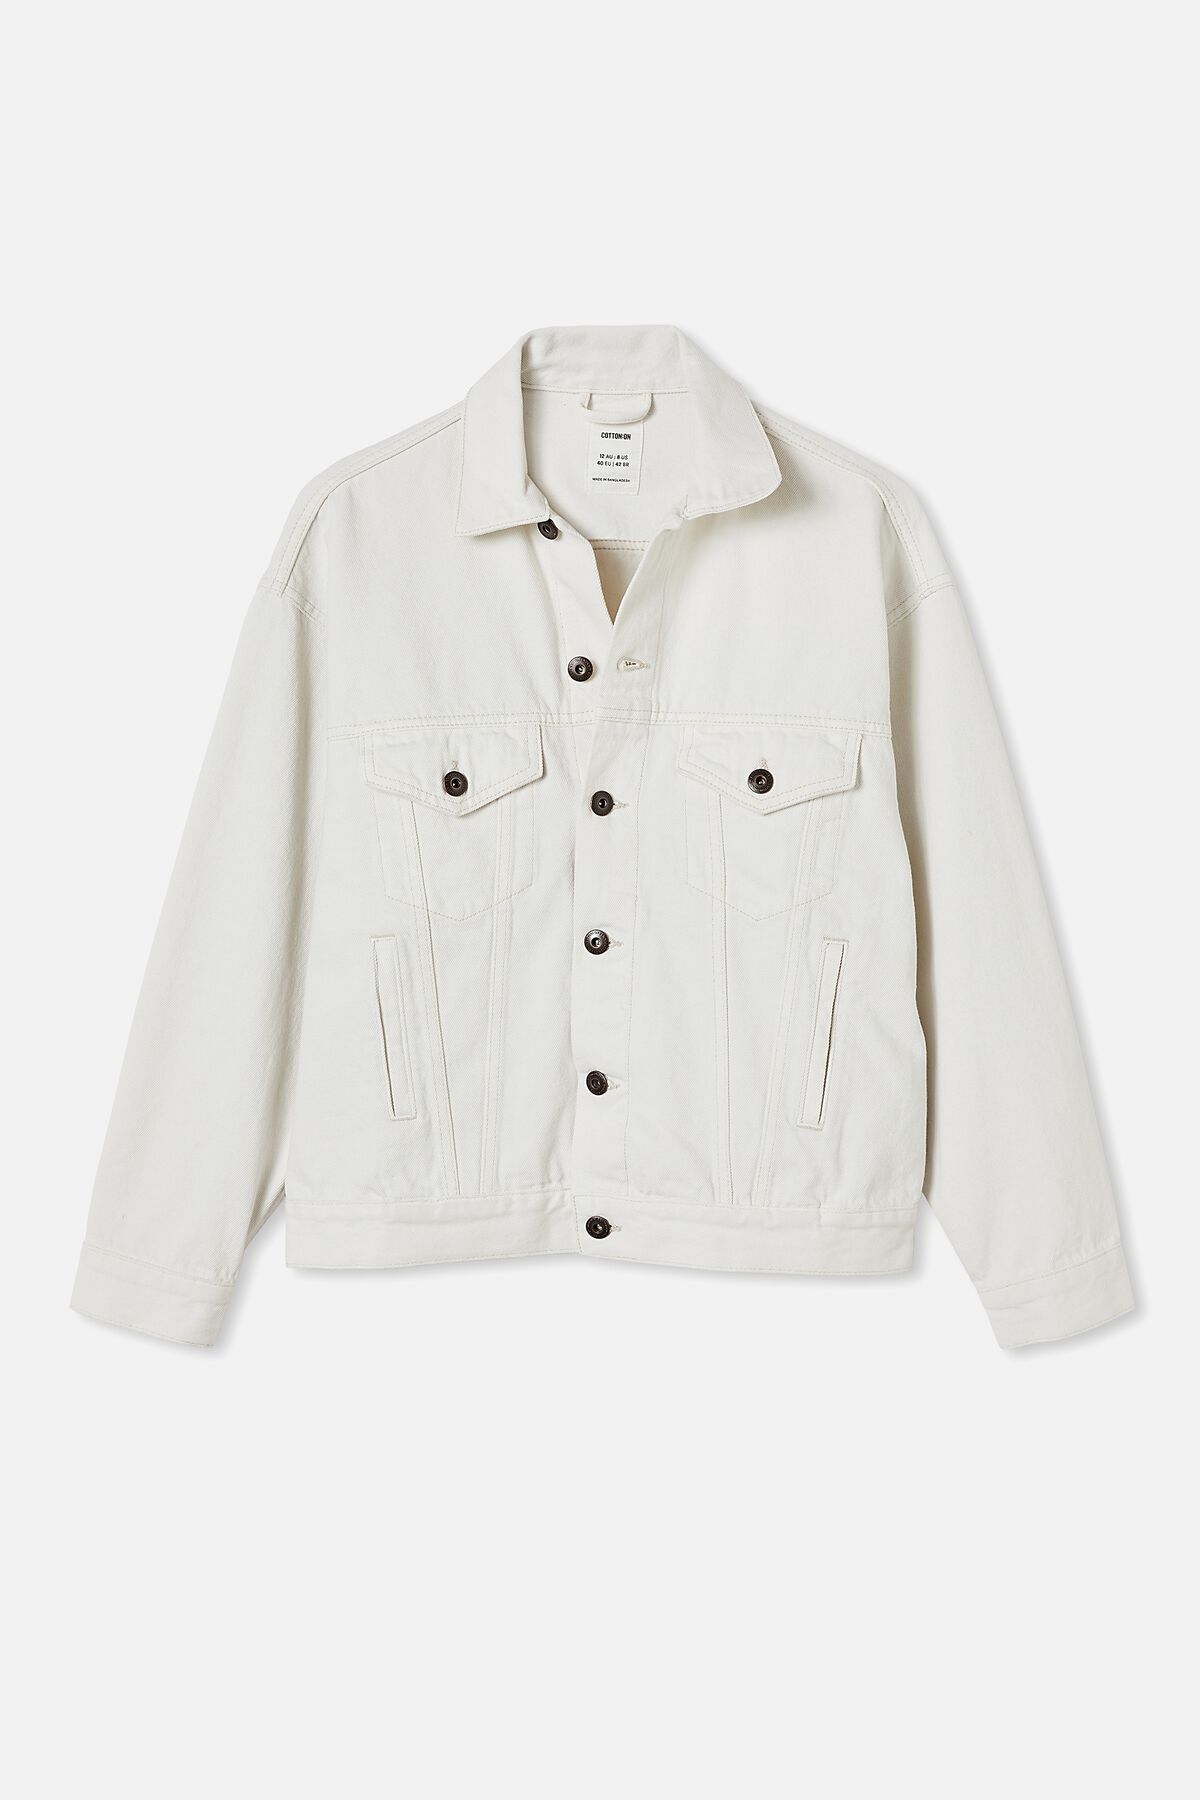 The Oversized Denim Jacket | Cotton On (ANZ)